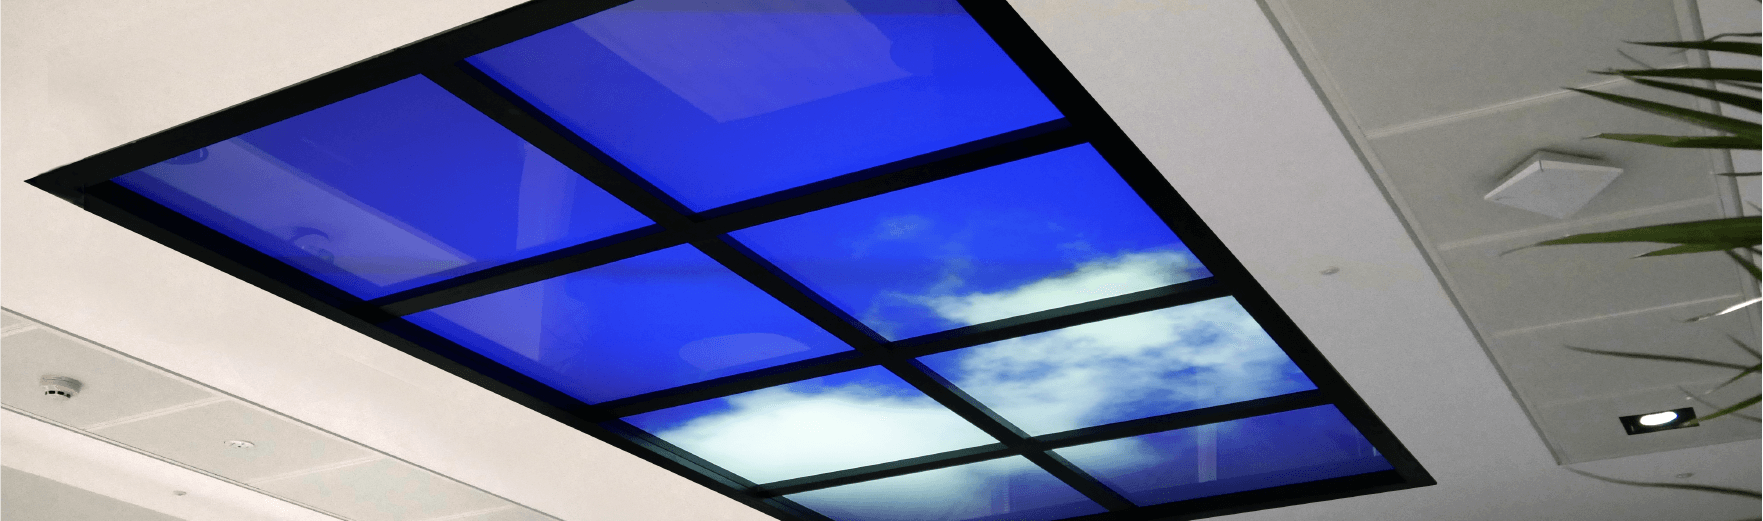 skylight projector blue